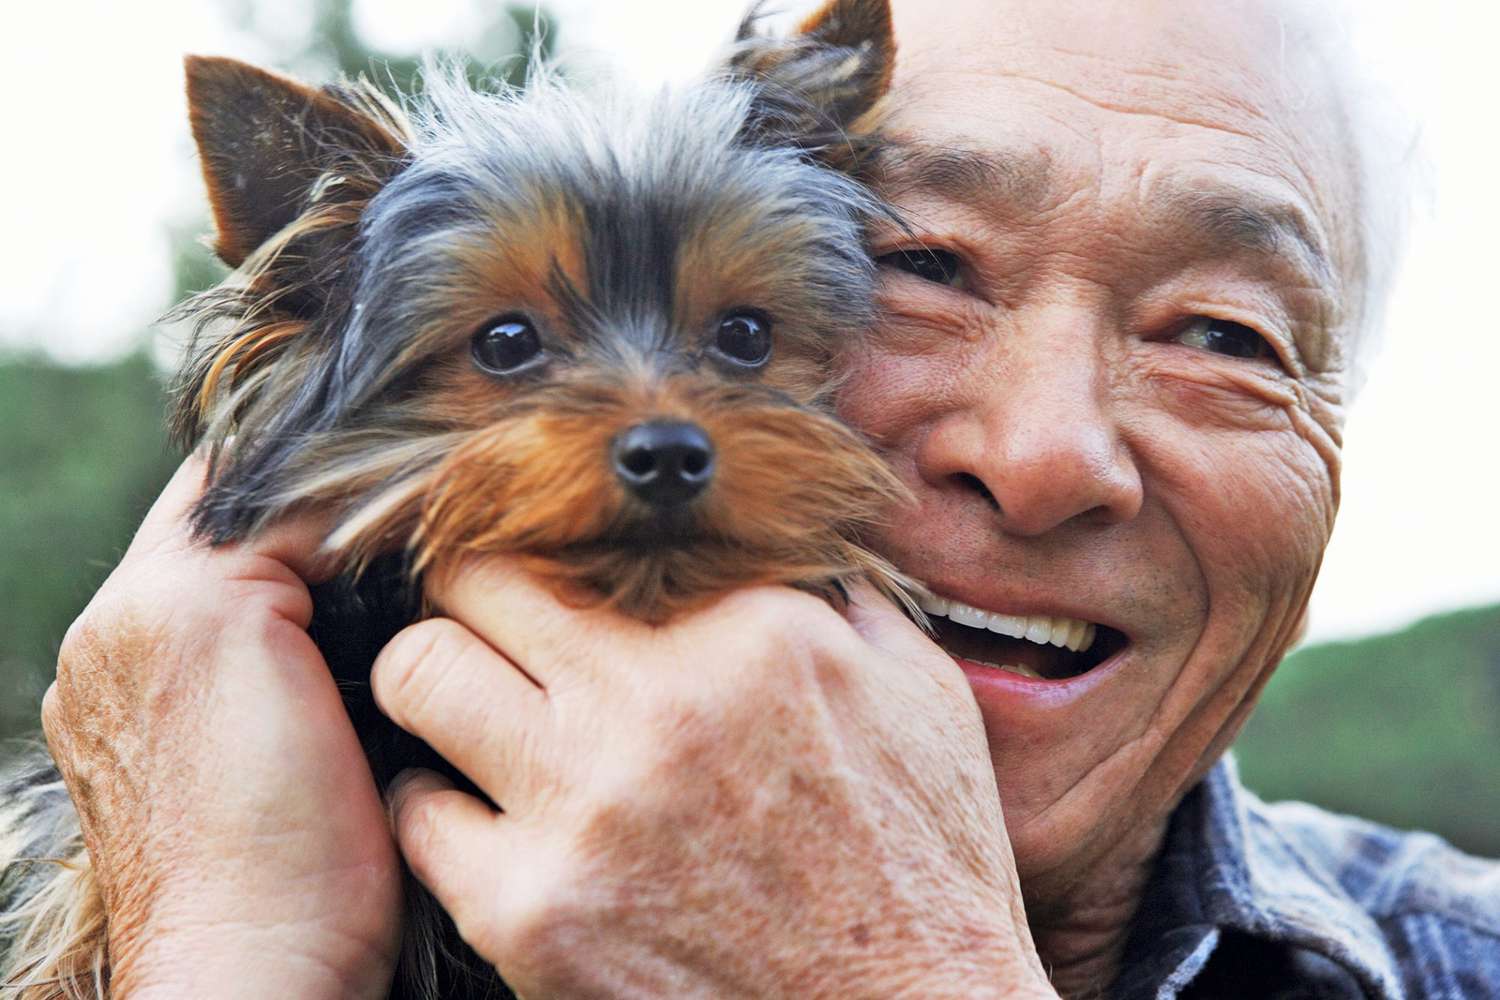 Senior Asian man holds small dog near face